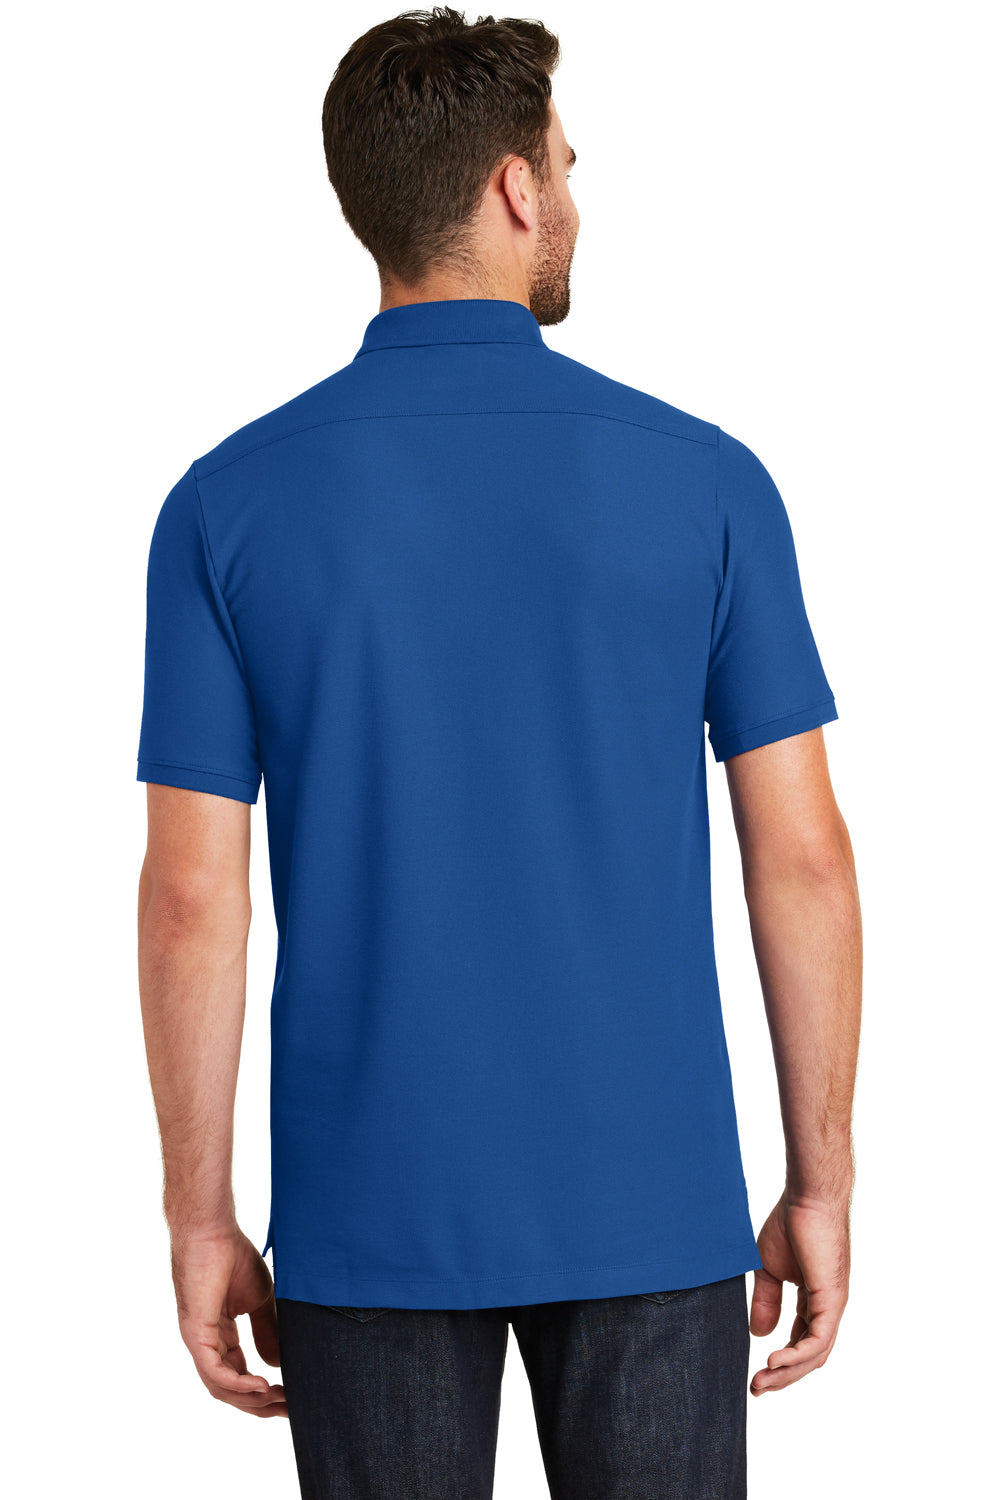 New Era NEA300 Mens Venue Home Plate Moisture Wicking Short Sleeve Polo Shirt Royal Blue Back